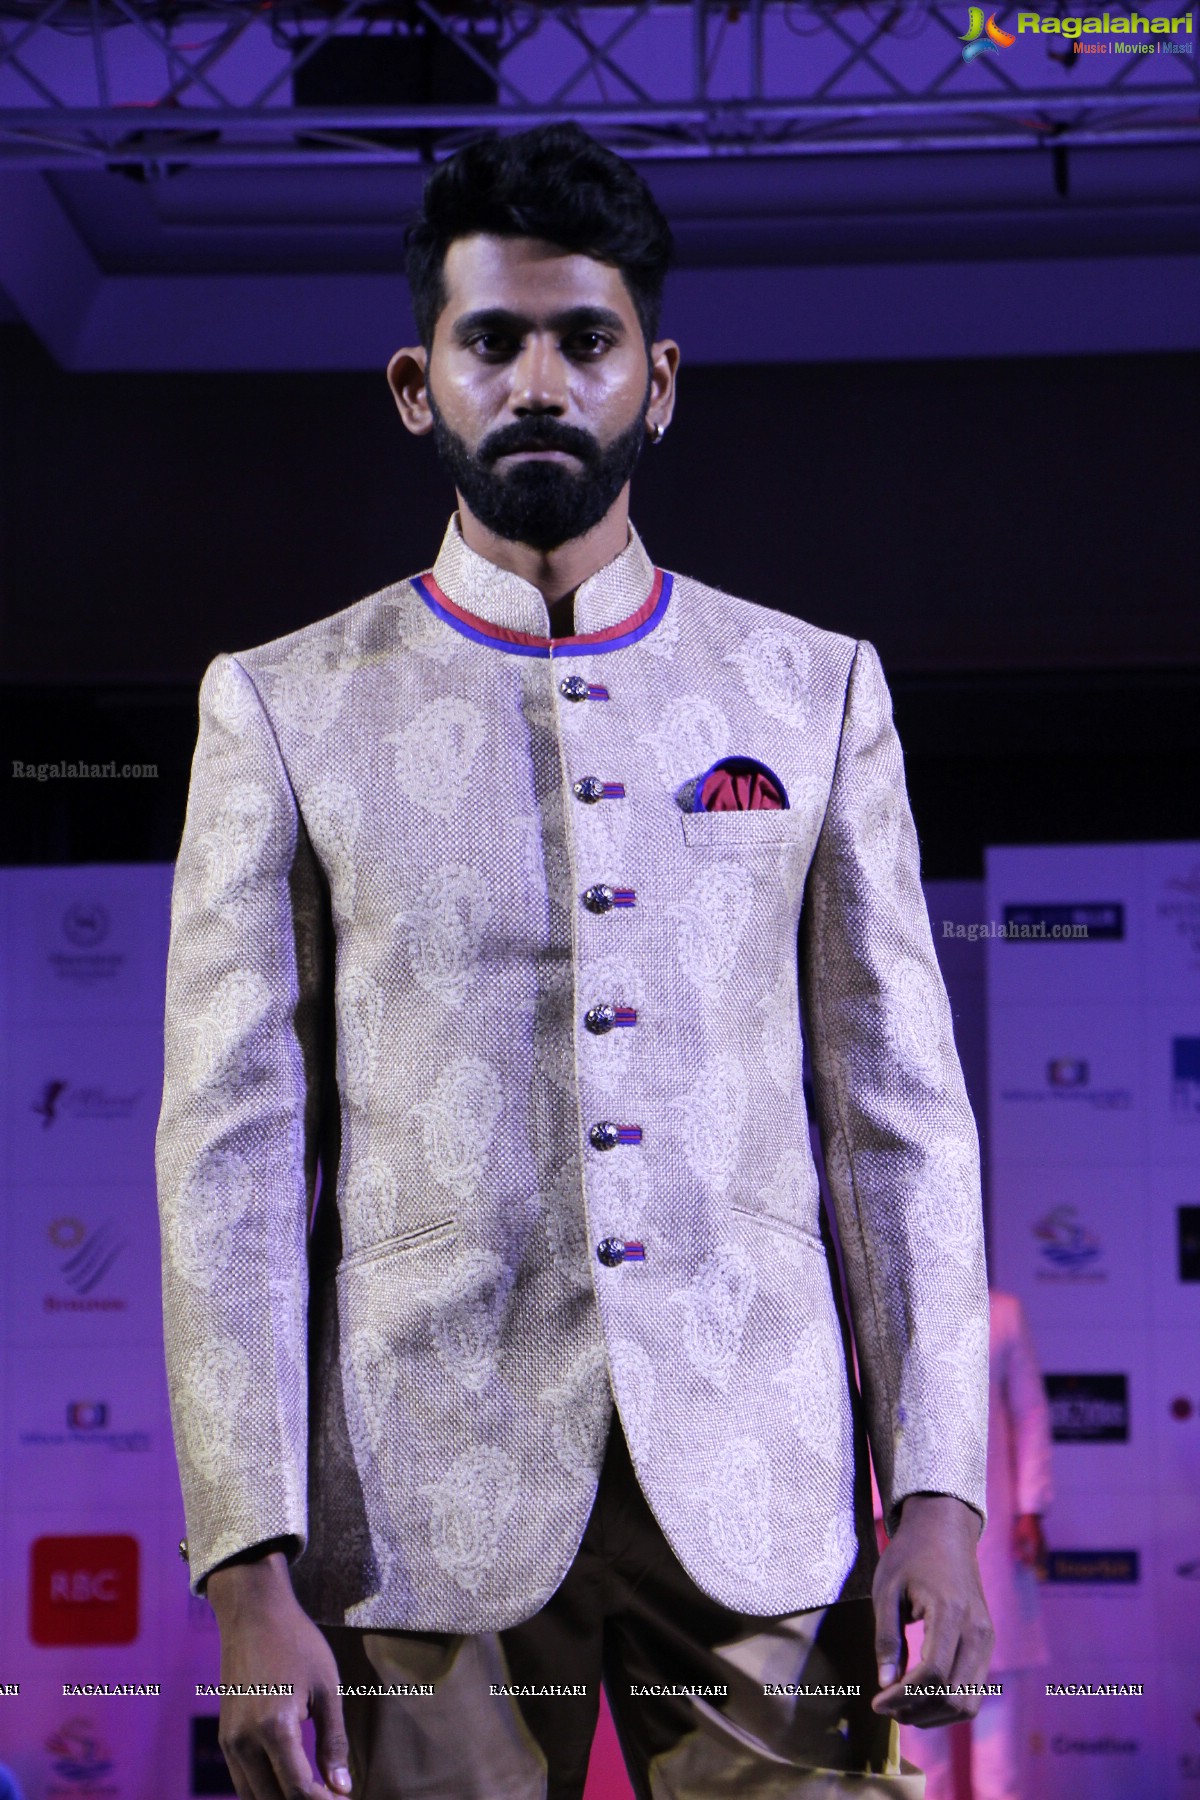 Hyderabad Fashion Week-2015, Season 4 (Day 1) at Sheraton Hyderabad Hotel